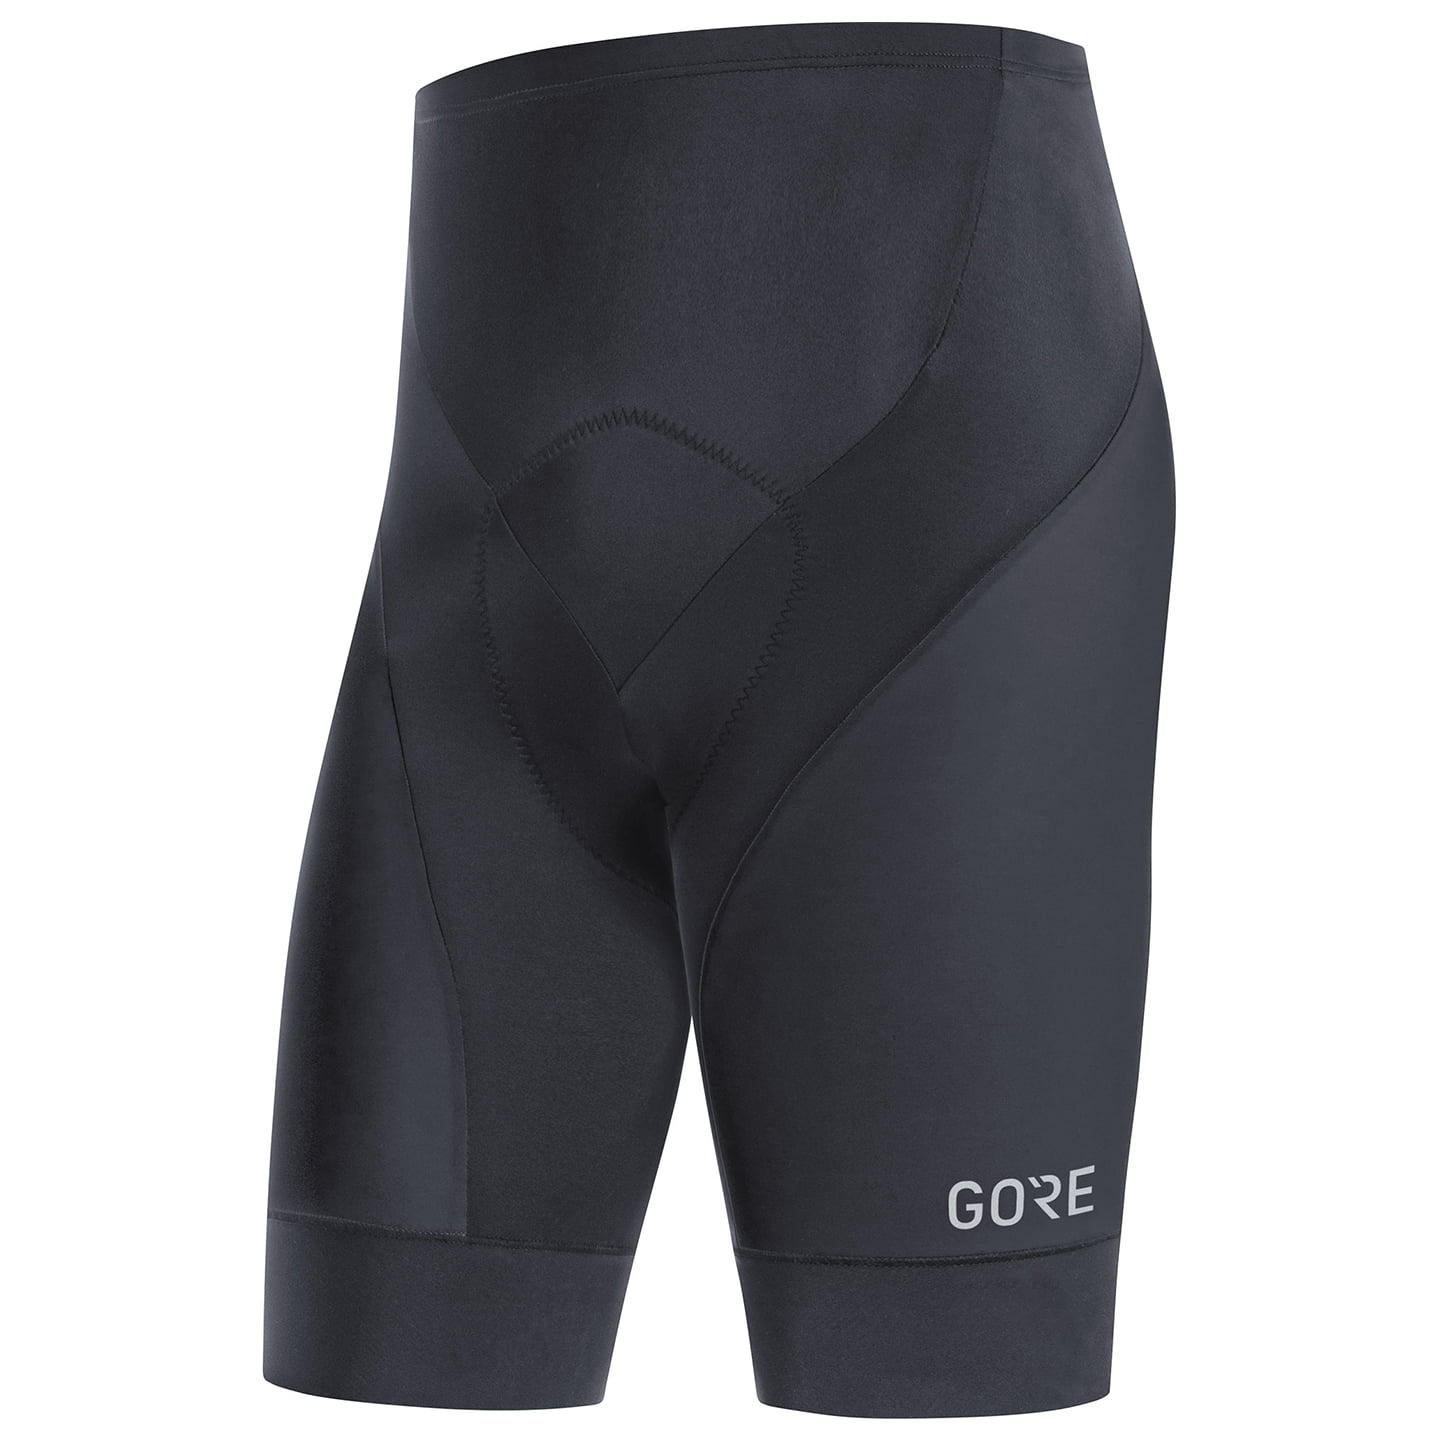 C3 Cycling Shorts, for men, size M, Cycle shorts, Cycling clothing